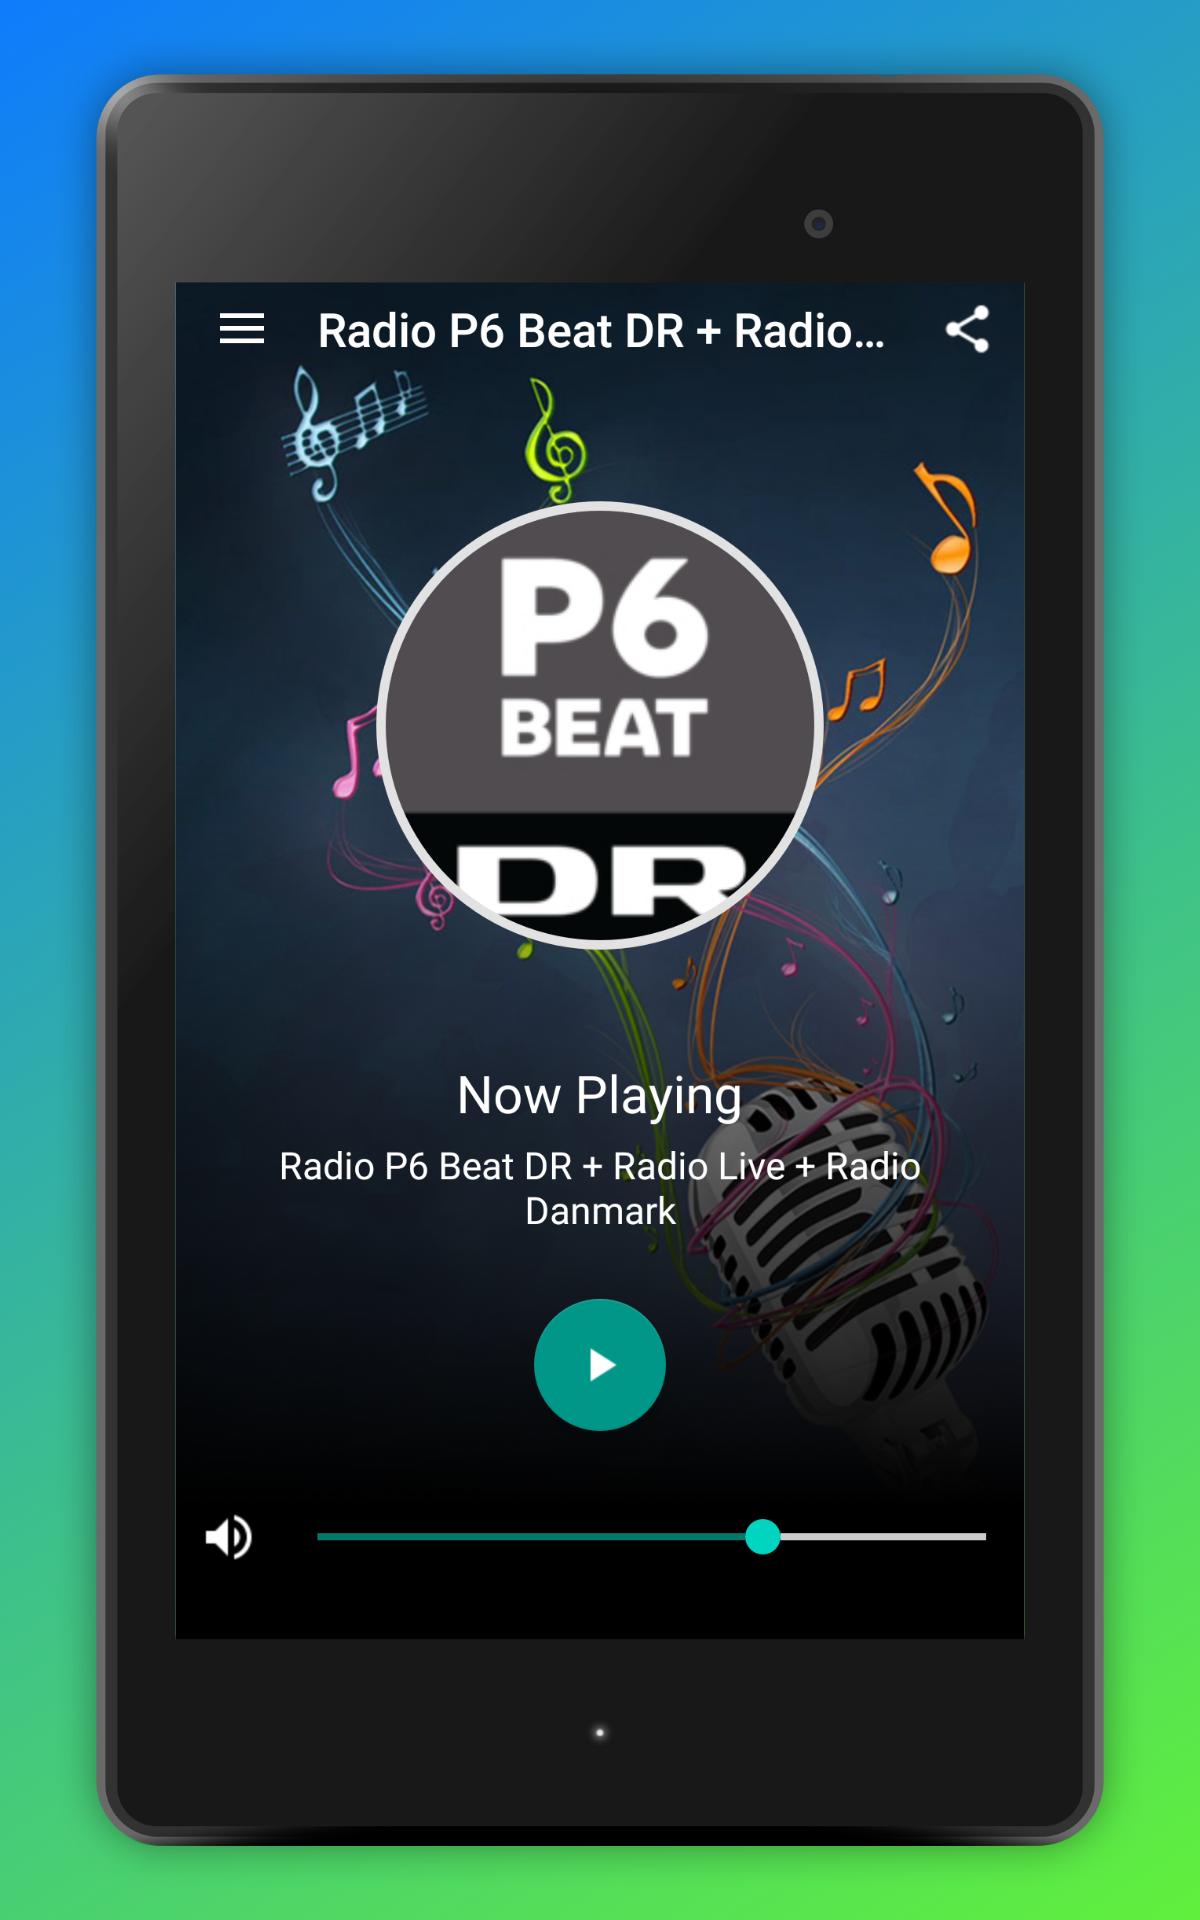 Radio P6 Beat DR + Radio Live + Radio Danmark for Android - APK Download